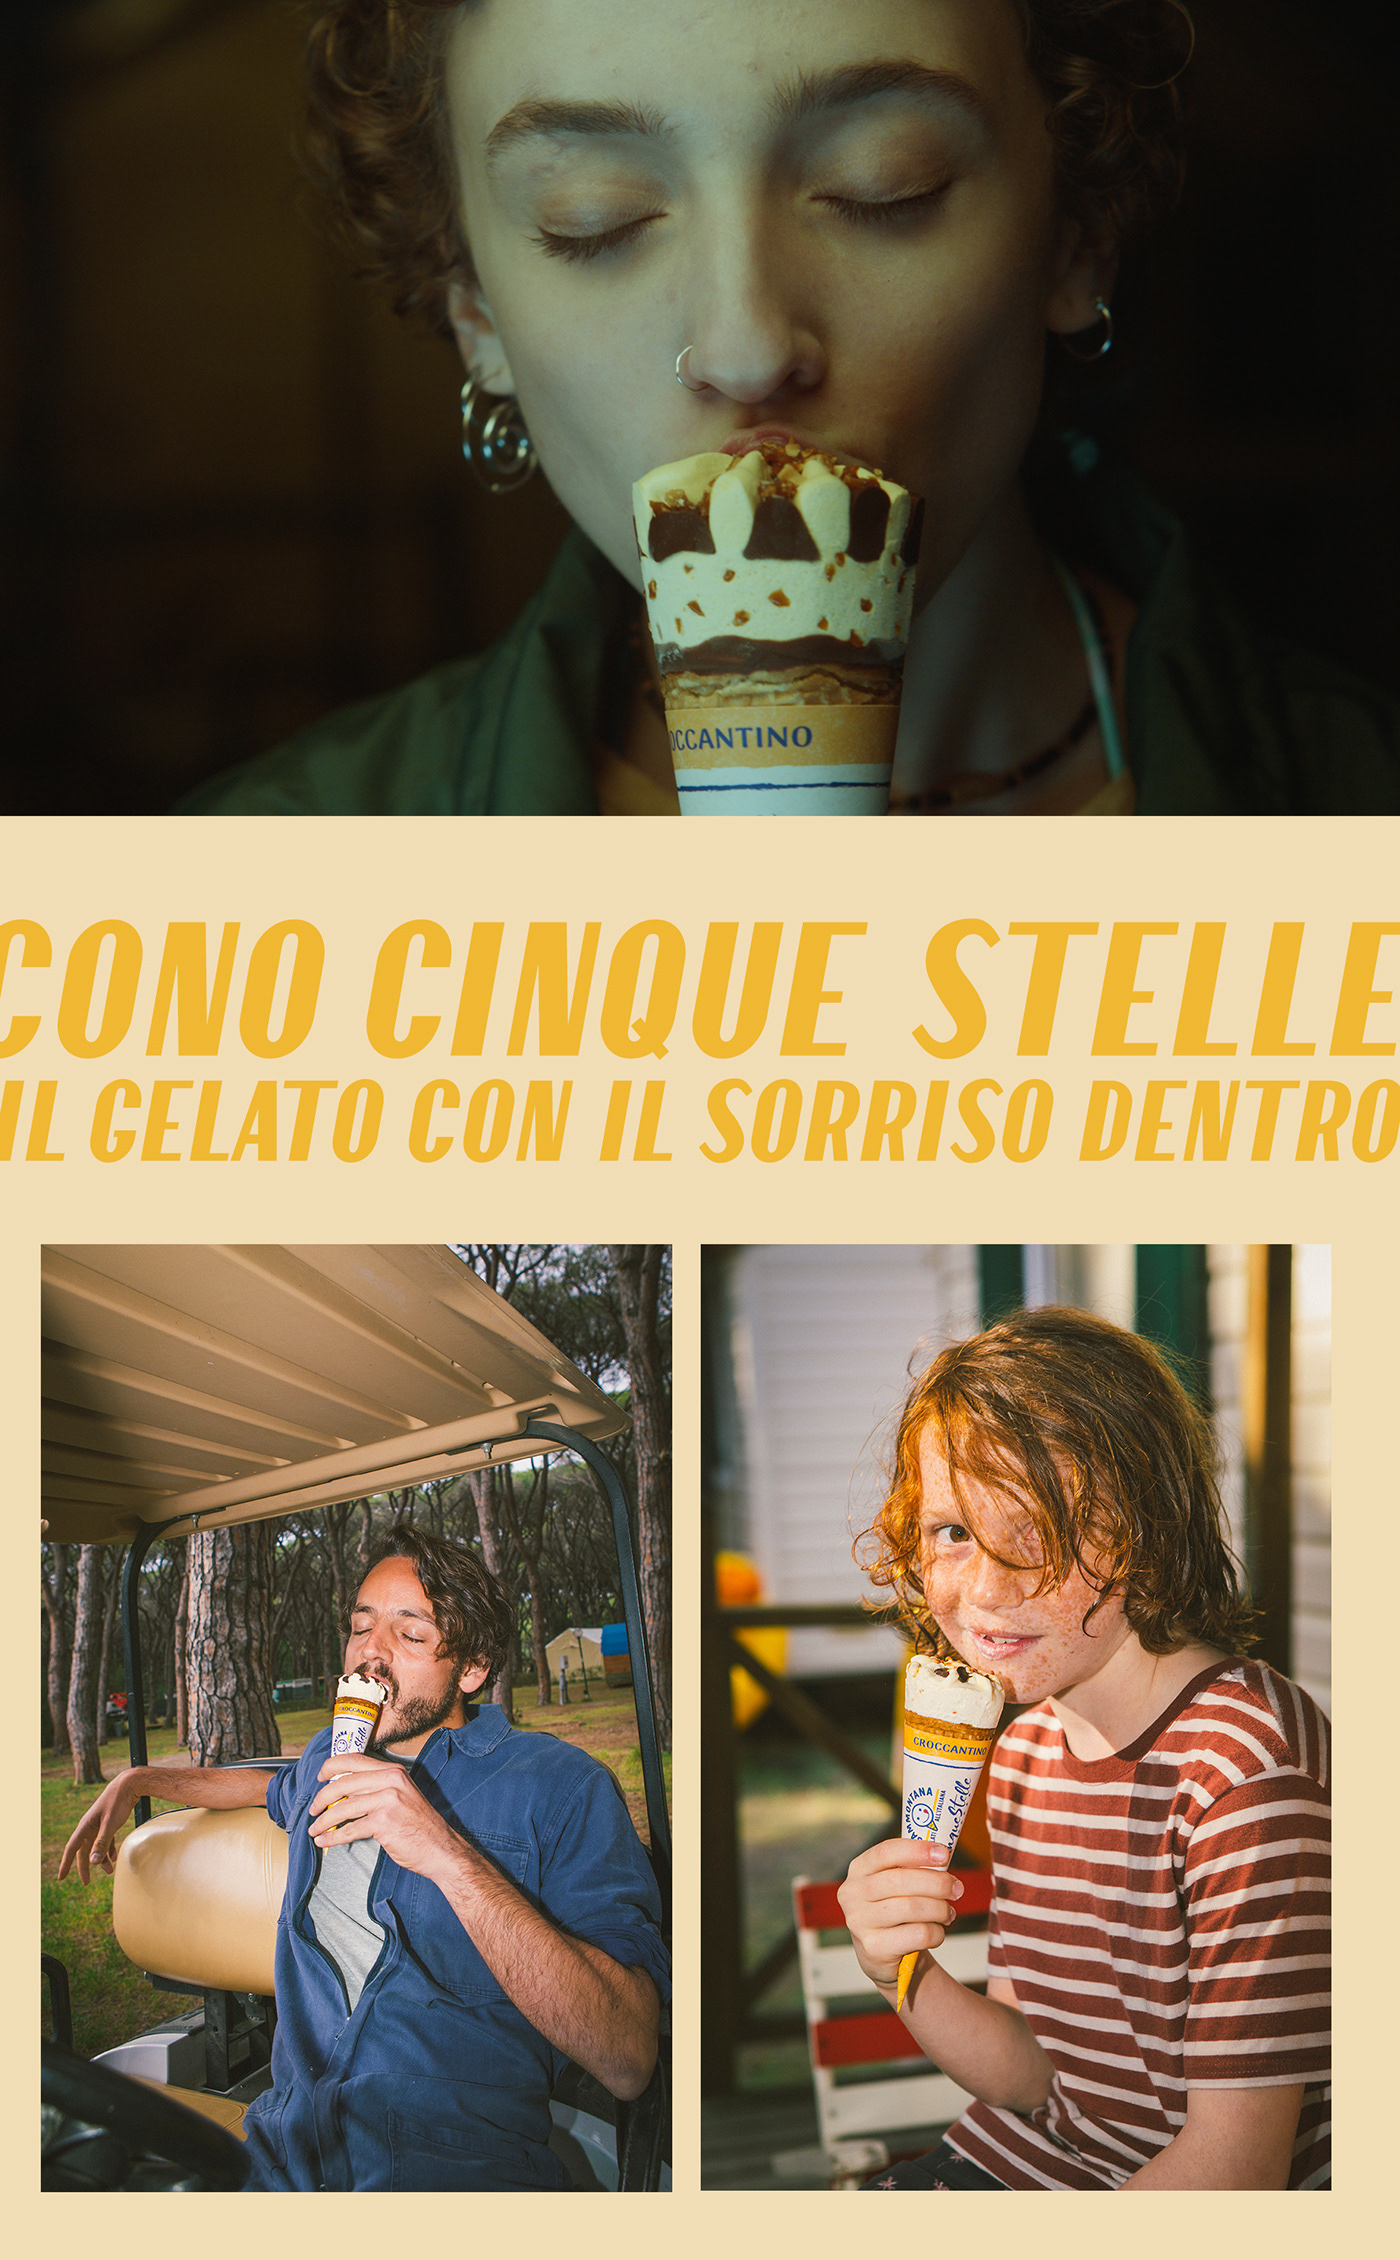 Advertising  commercial estate Film   Gelato ice cream italiana Sammontana smile summer